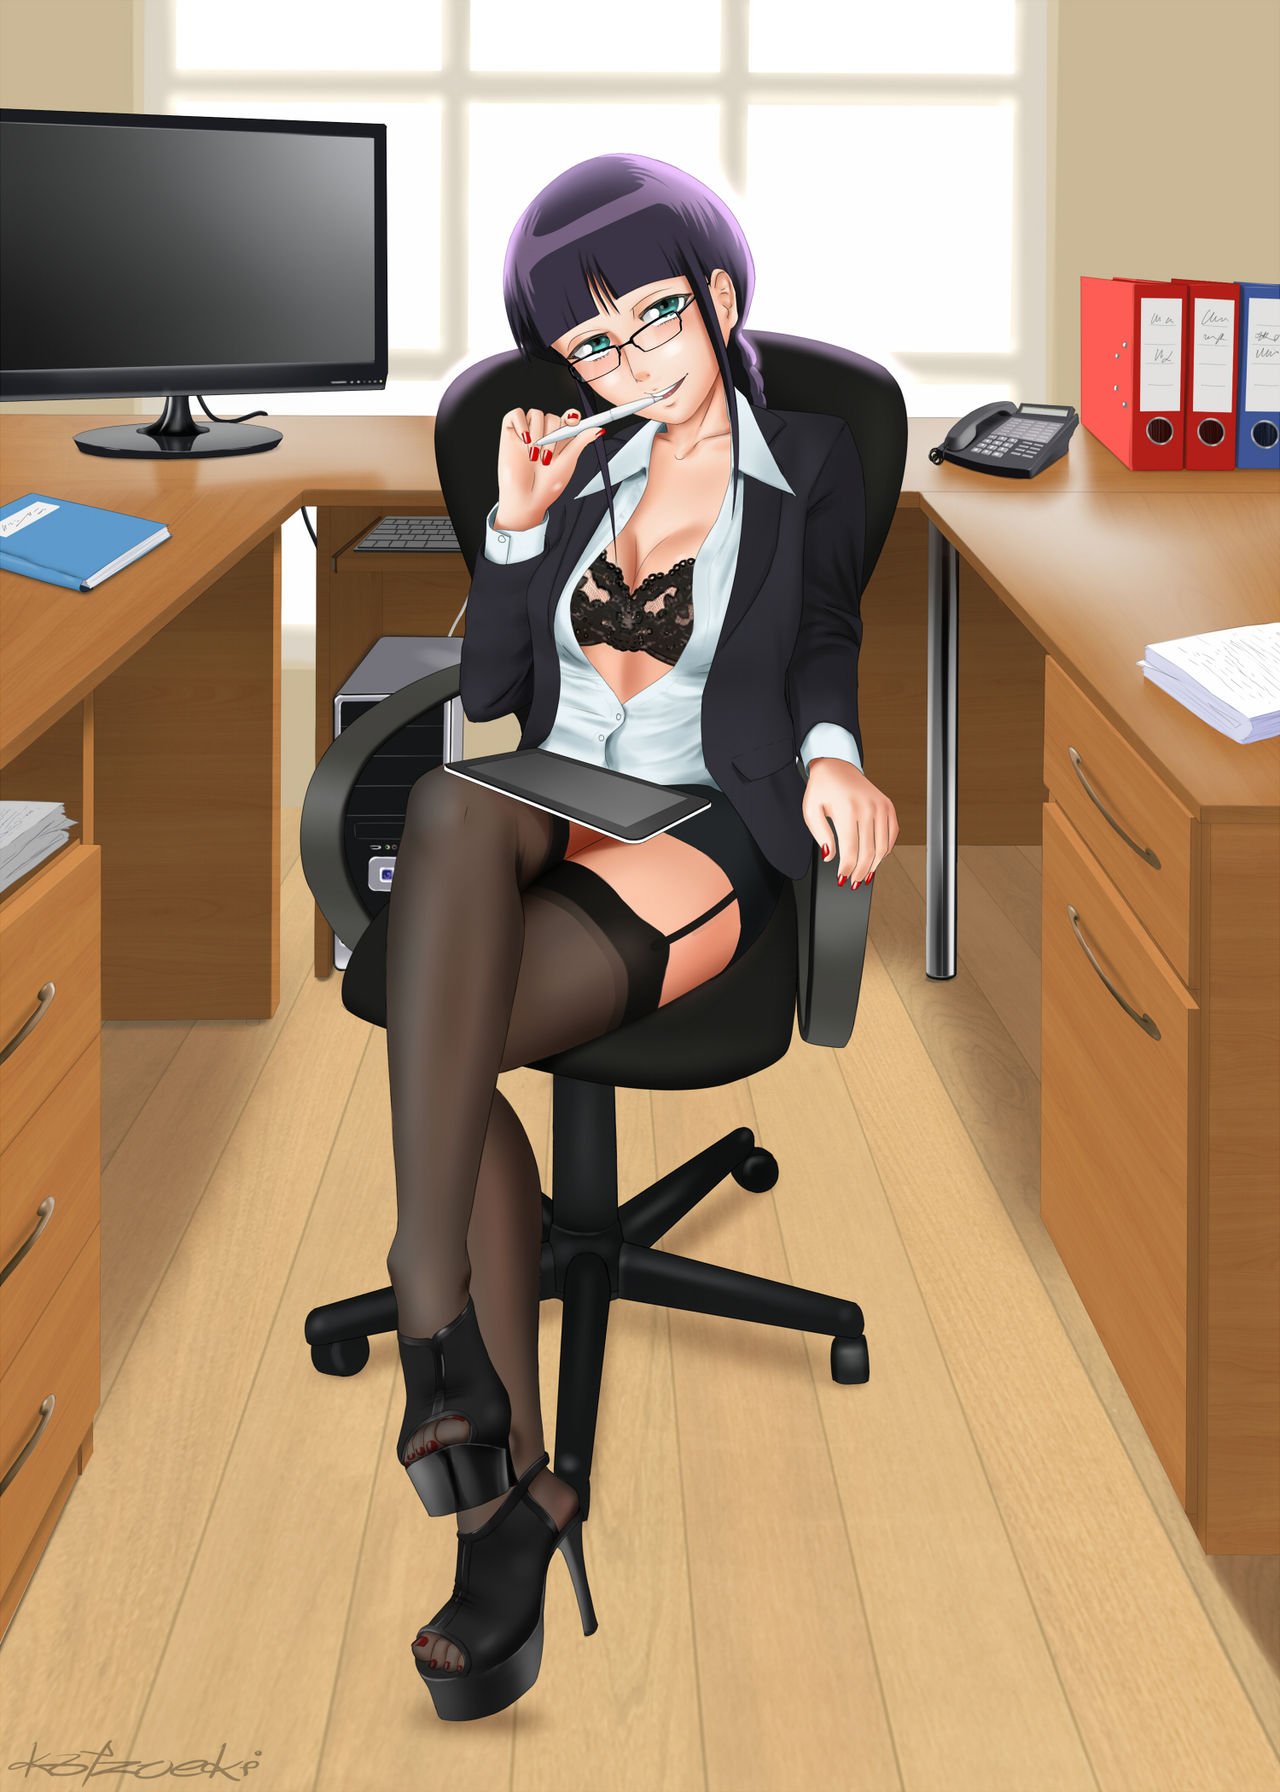 Nemu looking seductive at the office